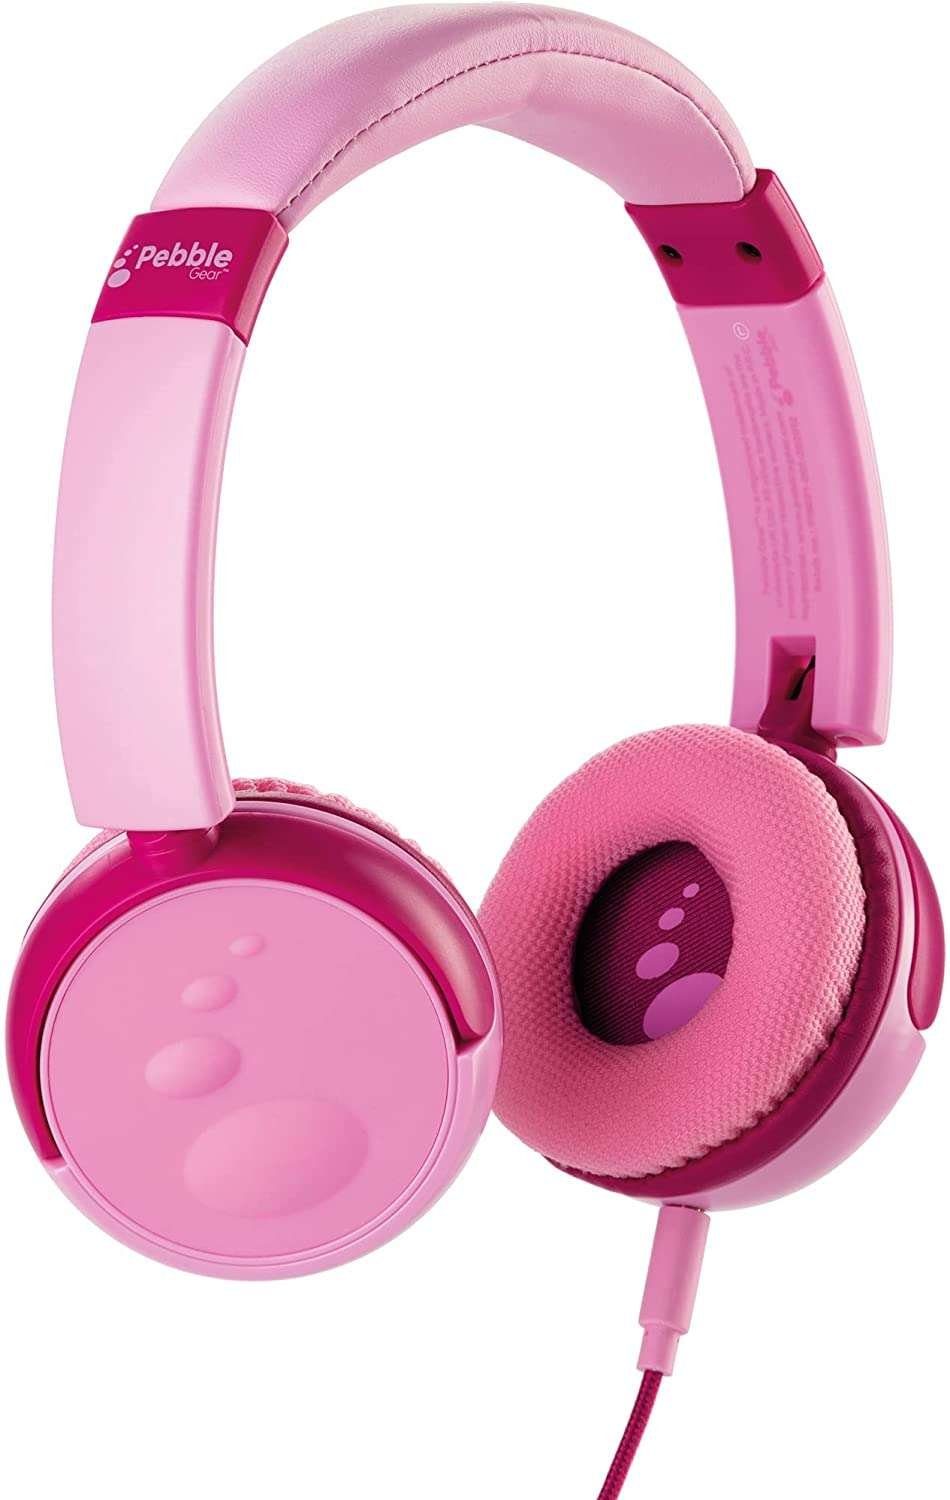 85 Pebble Klinke blau/ 85 Kinderkopfhörer dB Lautstärkebegrenzung dB pink Gear Kinder-Kopfhörer kindersicher Kindersicher faltbar, - mit (3,5mm Kids-Design), Lautstärkebegrenzung